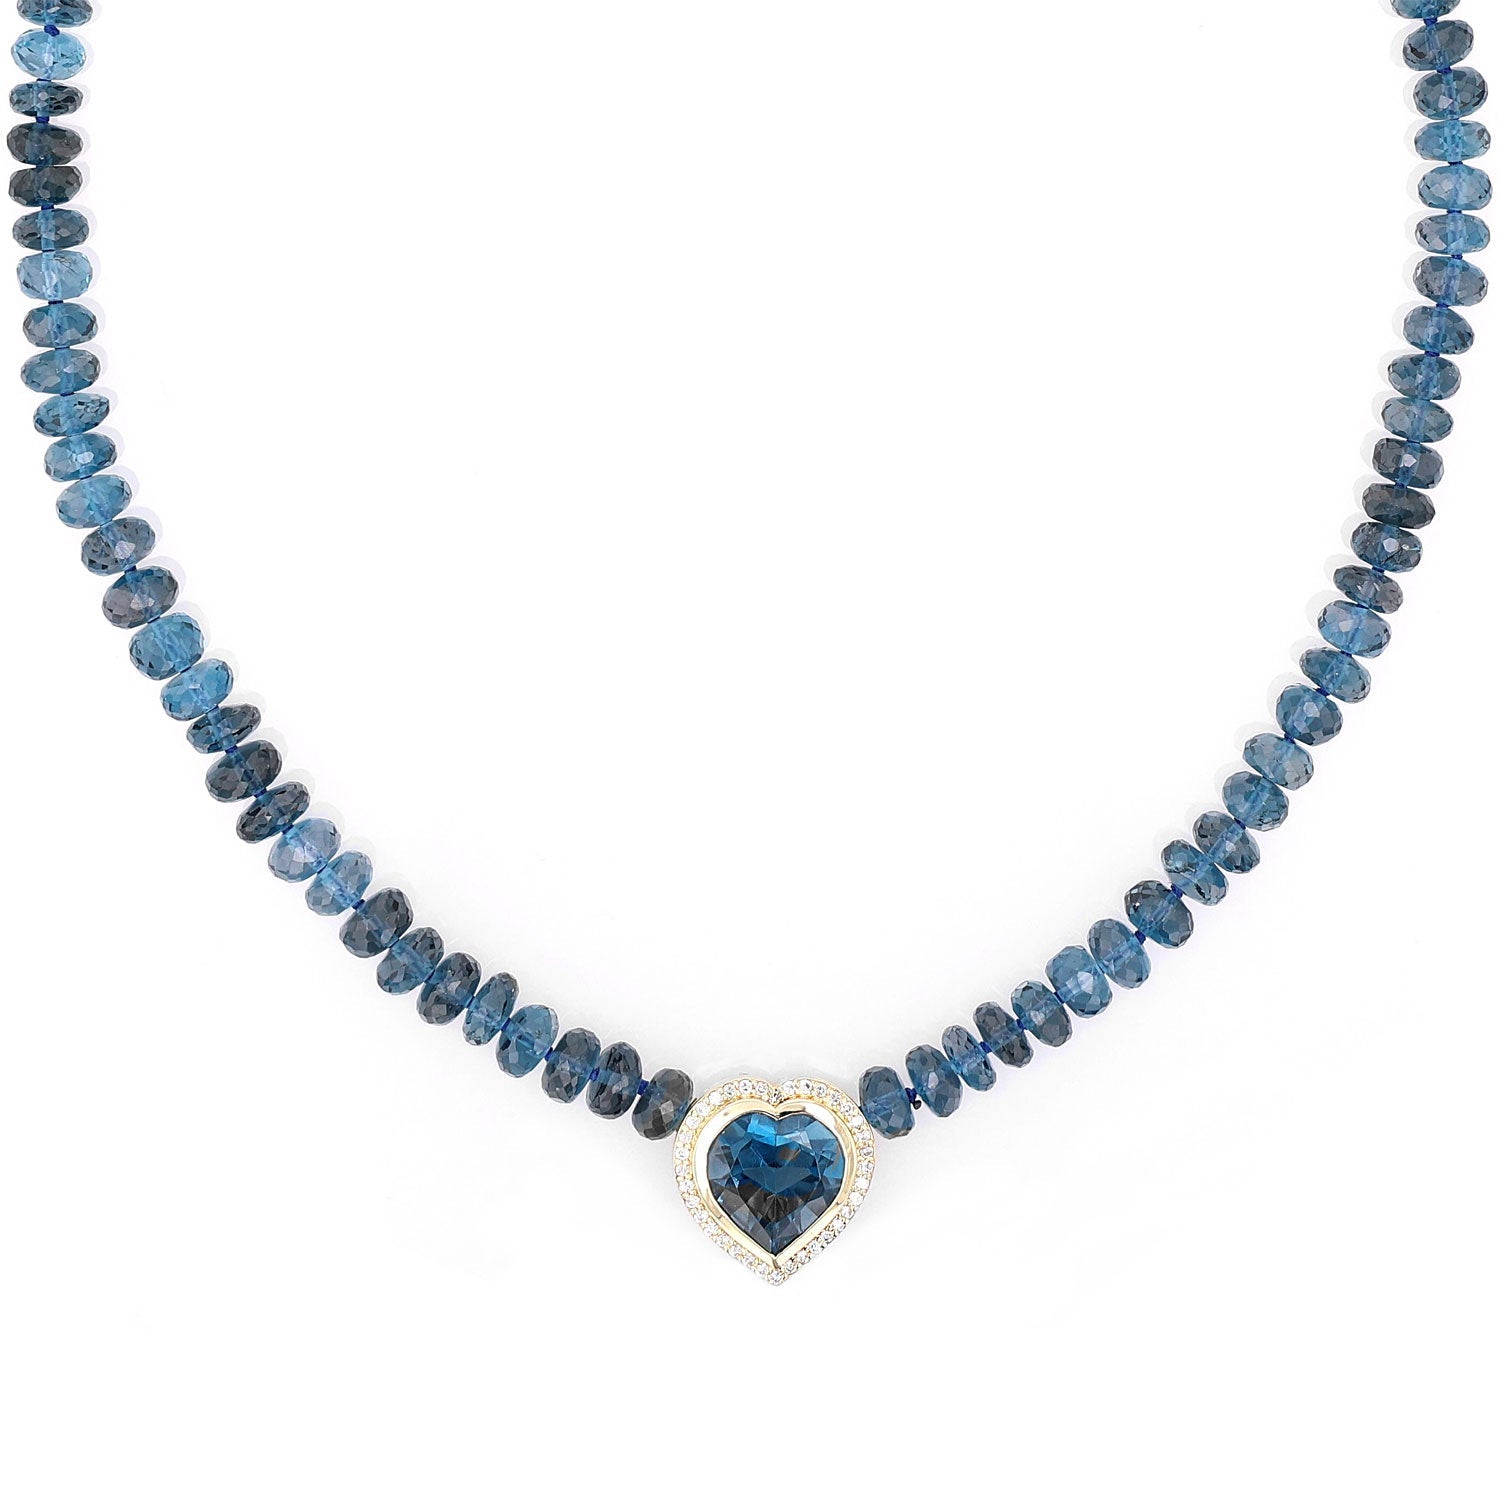 14K London Blue Topaz Diamond Heart Knotted Necklace  NG002568 - TBird